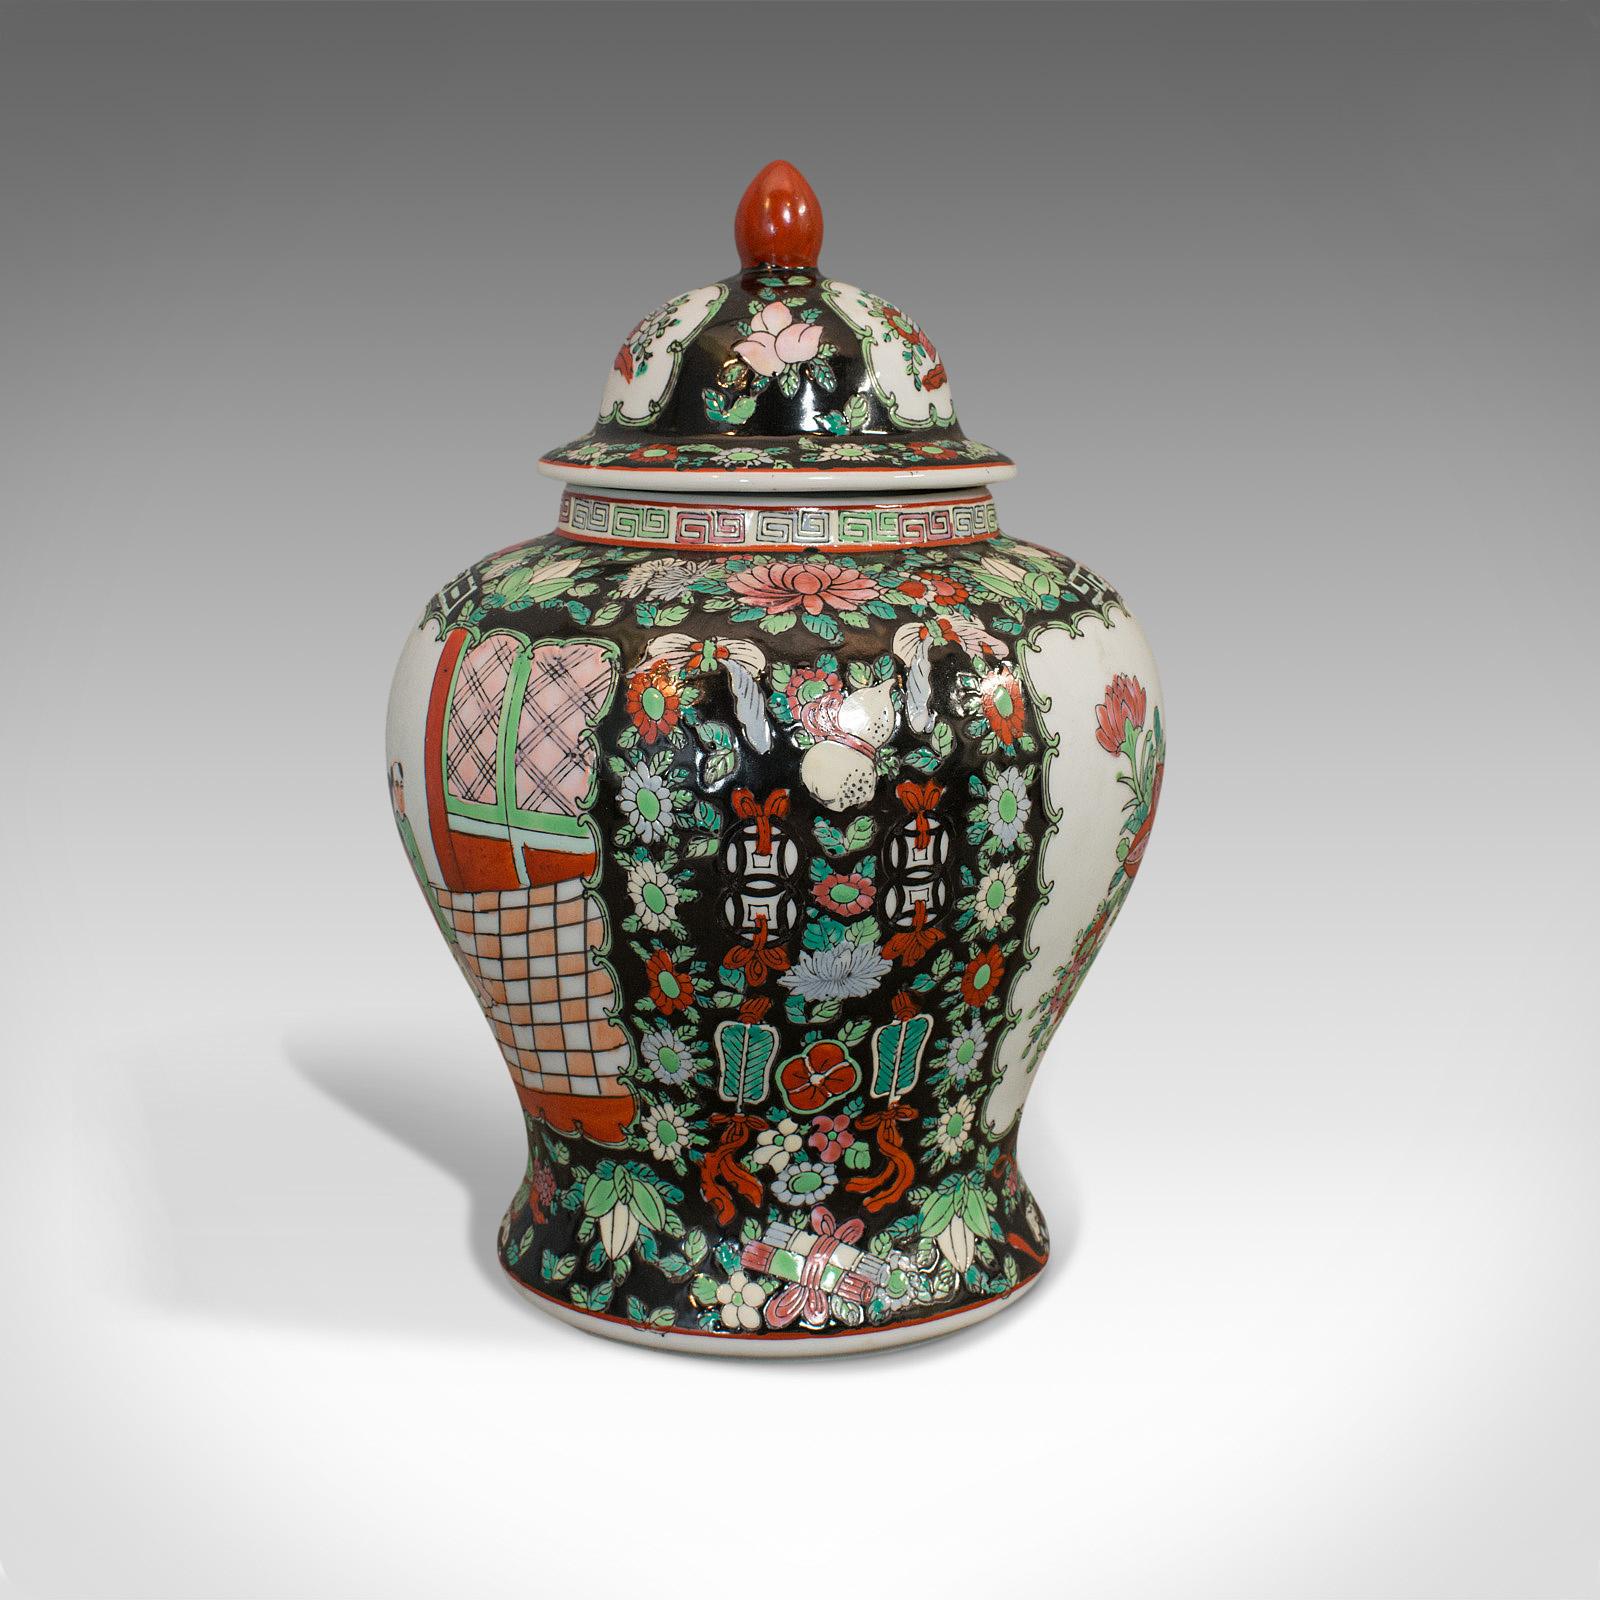 Chinese Export Vintage Spice Jar, Oriental, Ginger, Baluster Urn, Art Deco, 20th Century, 1940 For Sale